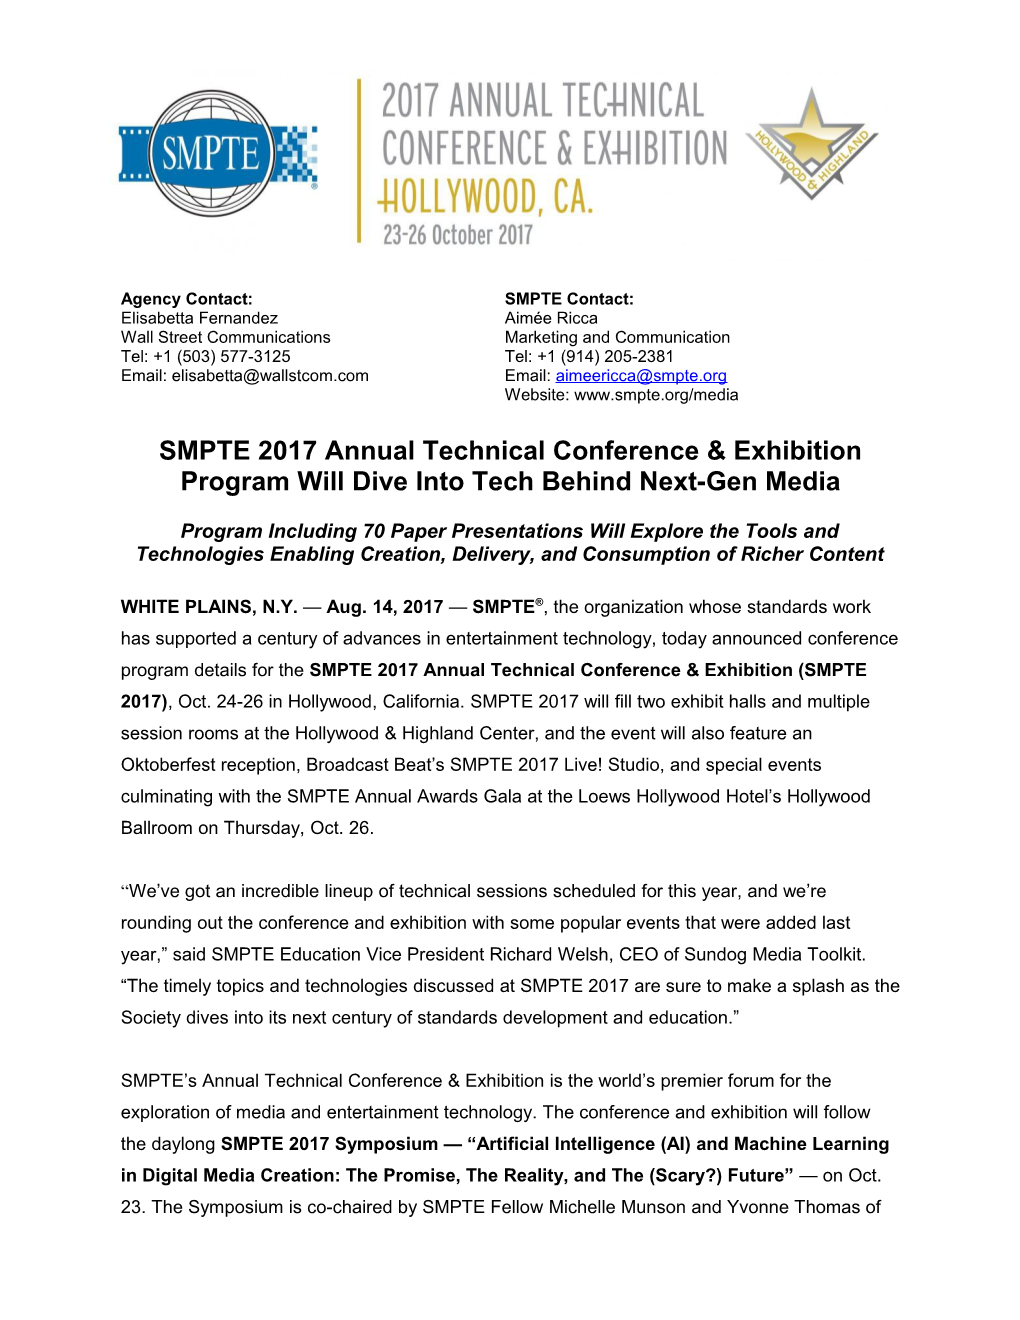 SMPTE Press Release